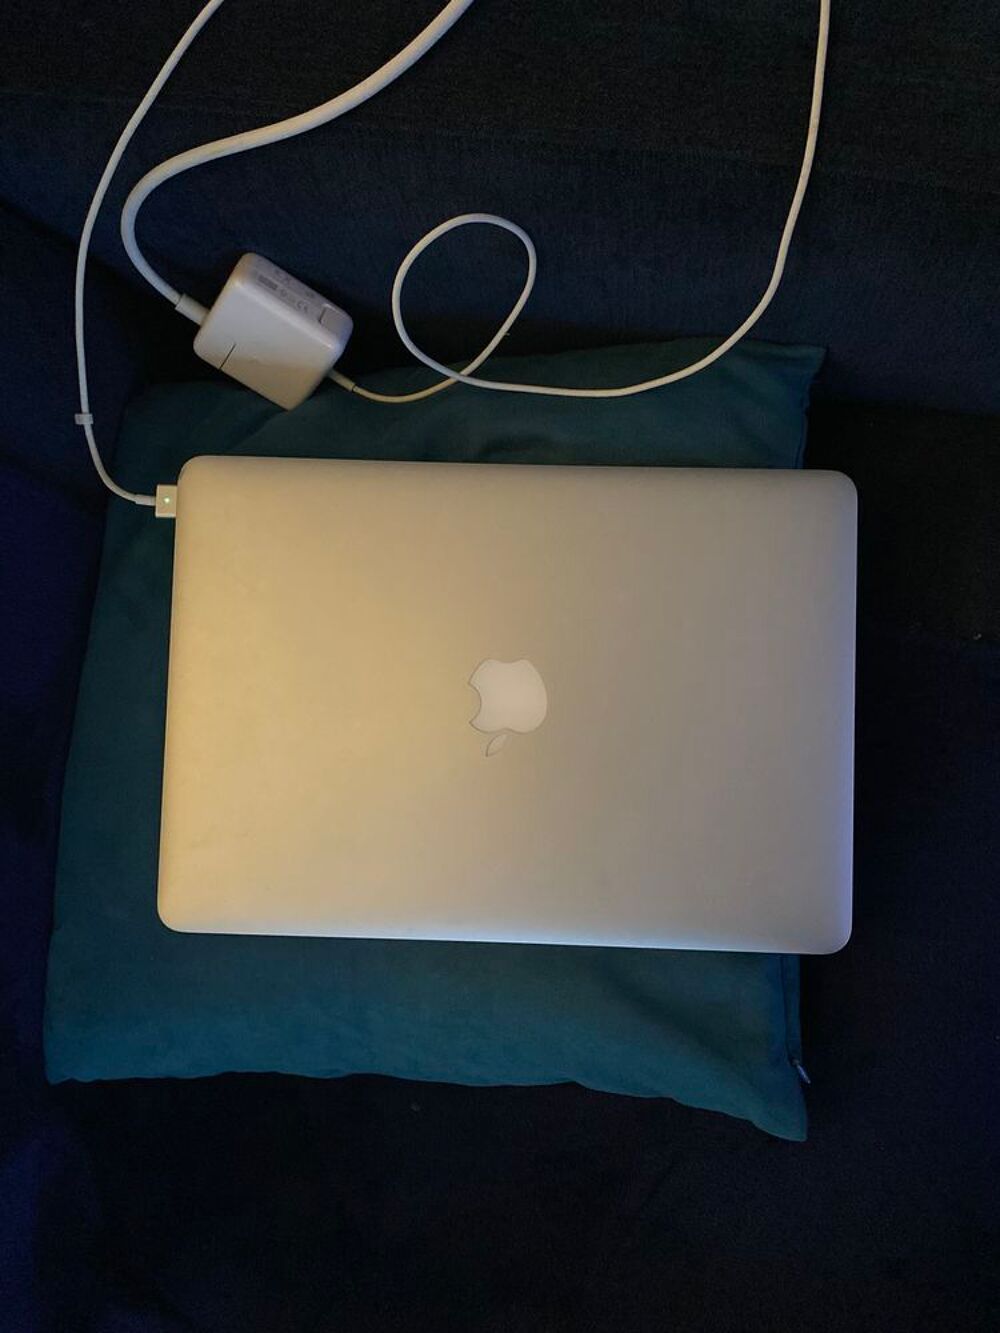 MacBook Air 2017 Matriel informatique